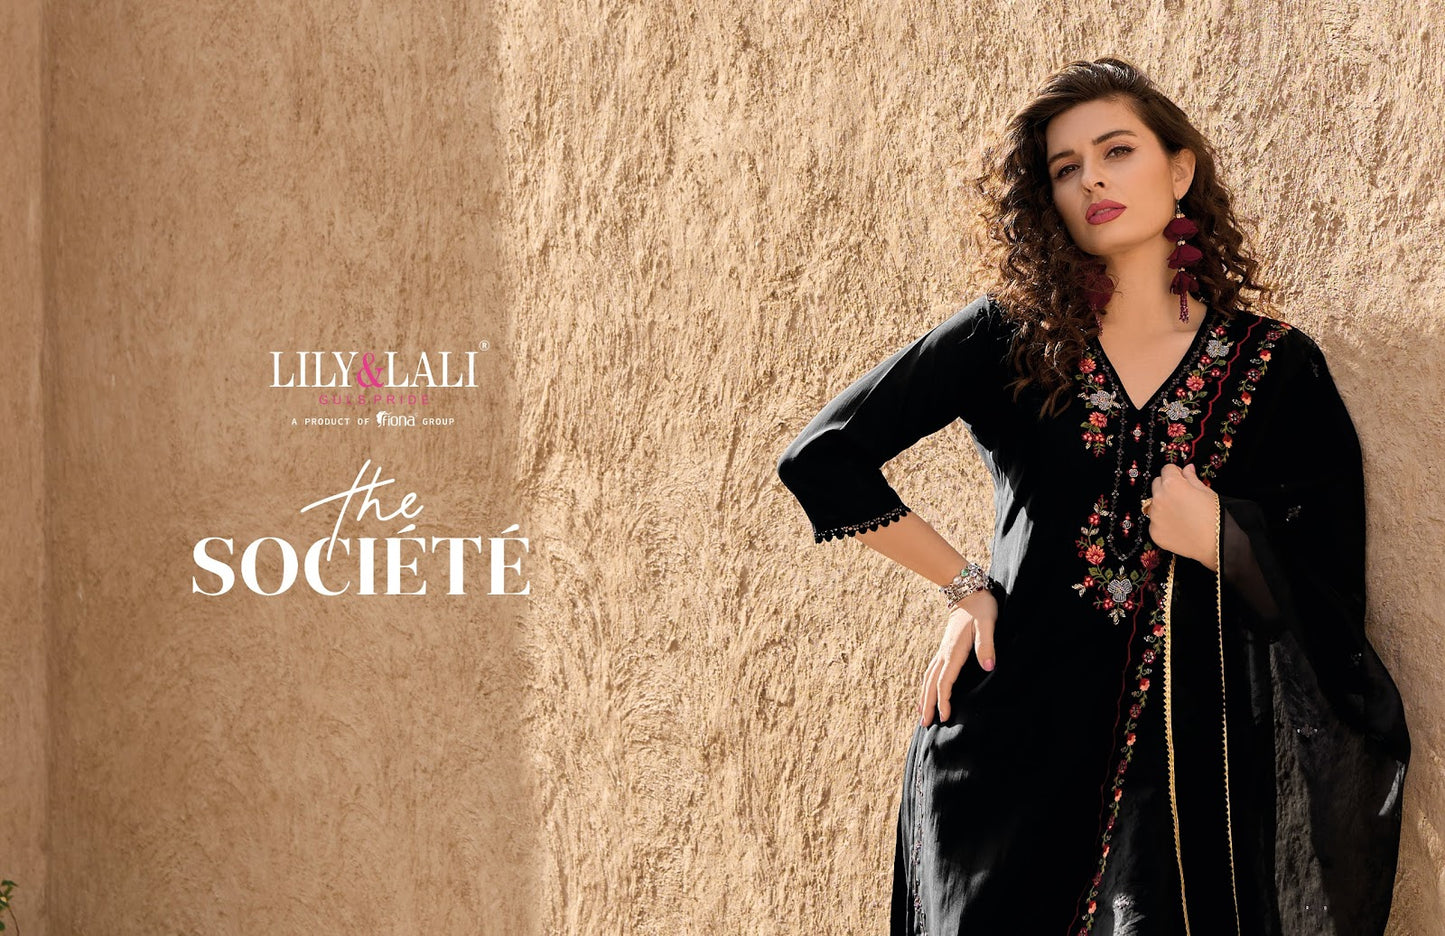 Miraan Lily Lali Milan Silk Readymade Pant Style Suits